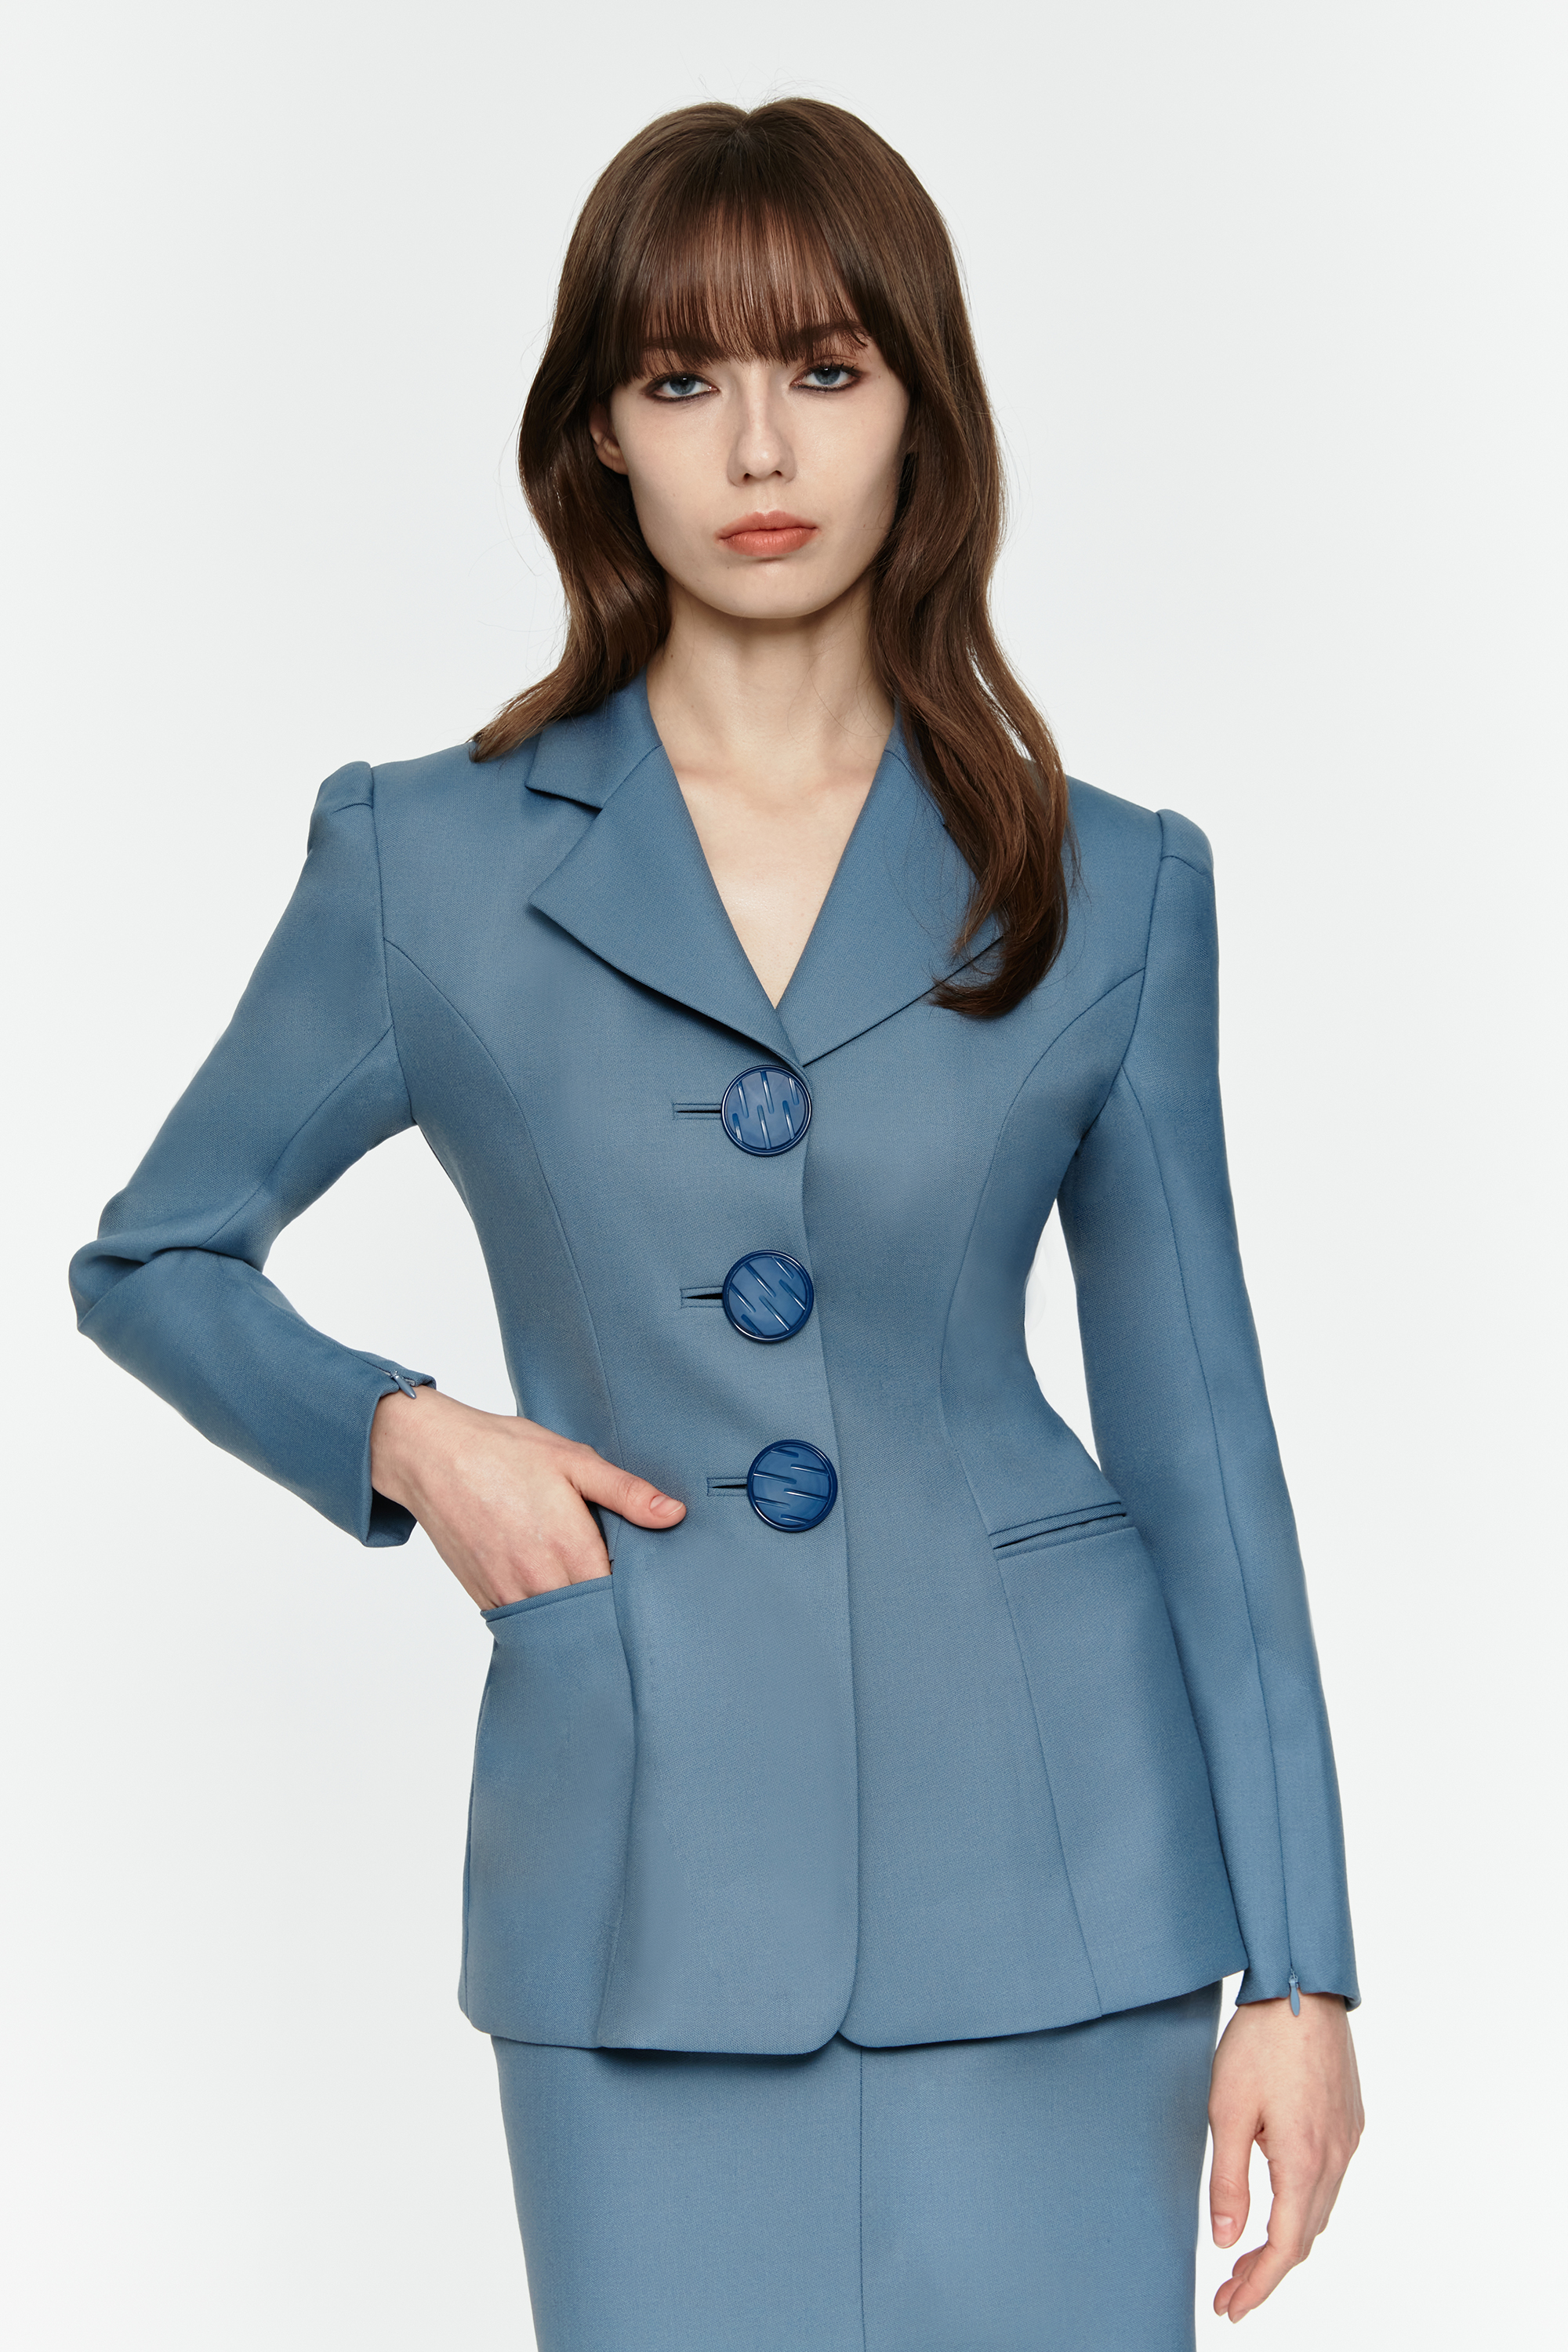 [Custom Order] Printemps Blue Suit